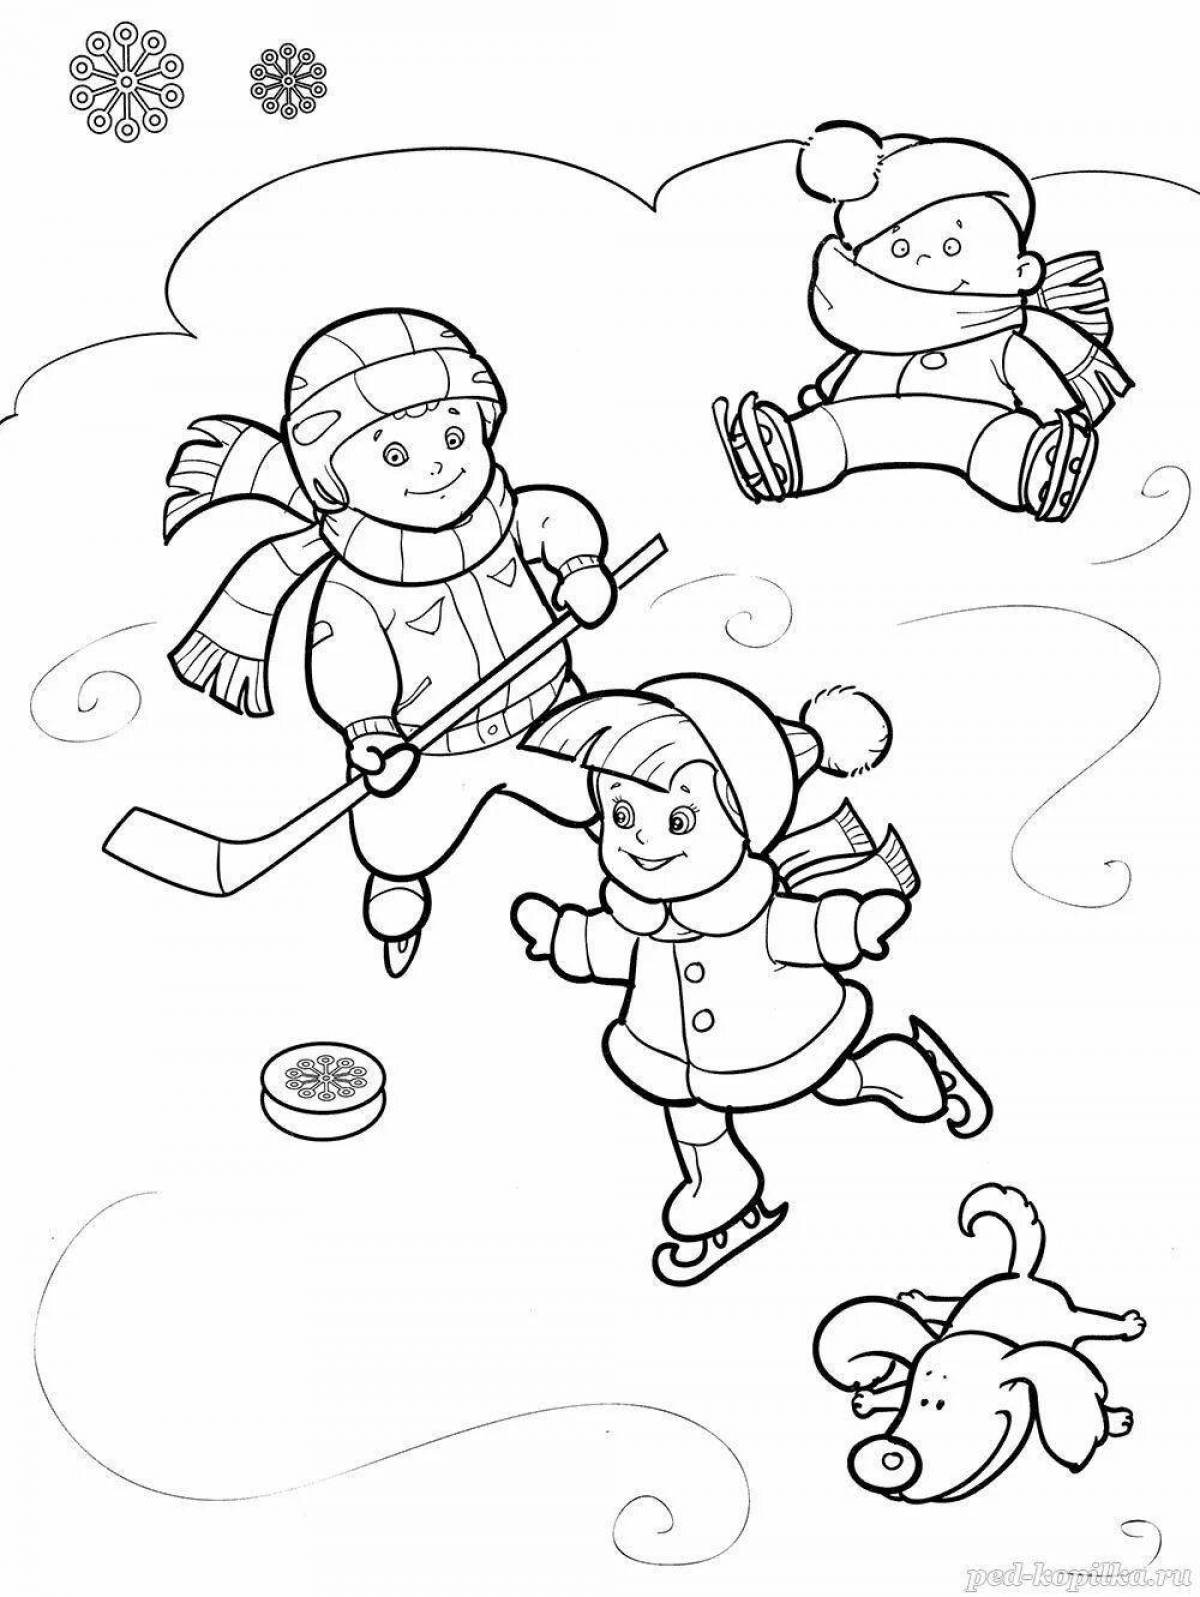 Fantastic winter games coloring book